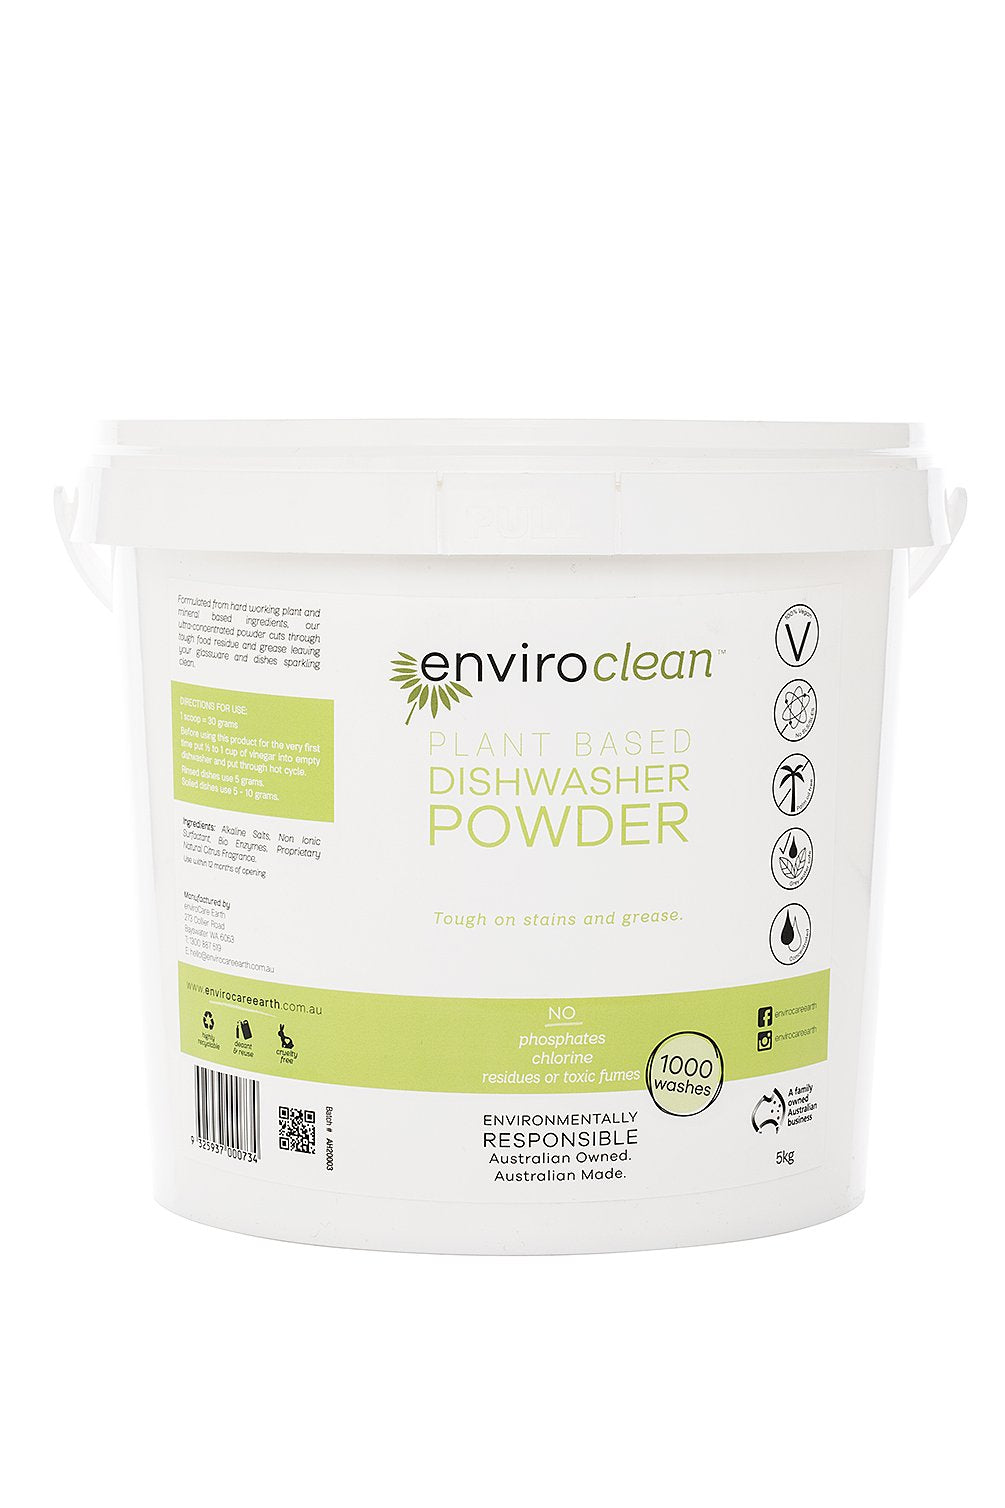 Dishwasher Powder from Enviroclean